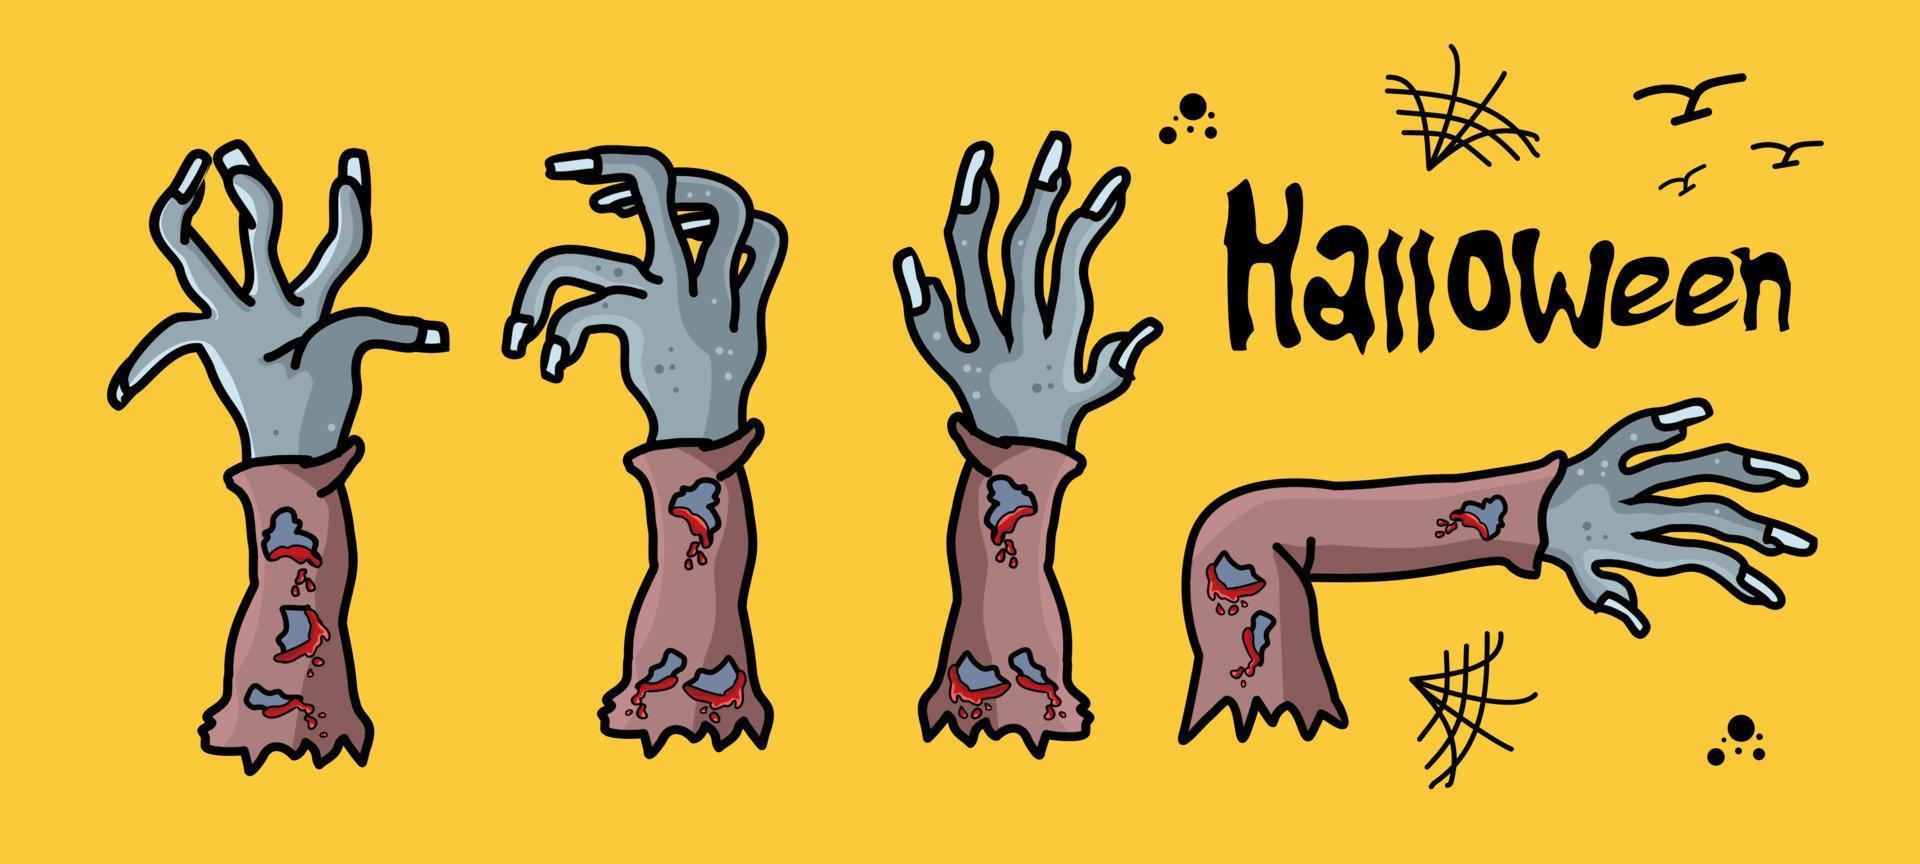 Zombie-Hand-Vektor-Set für Halloween vektor